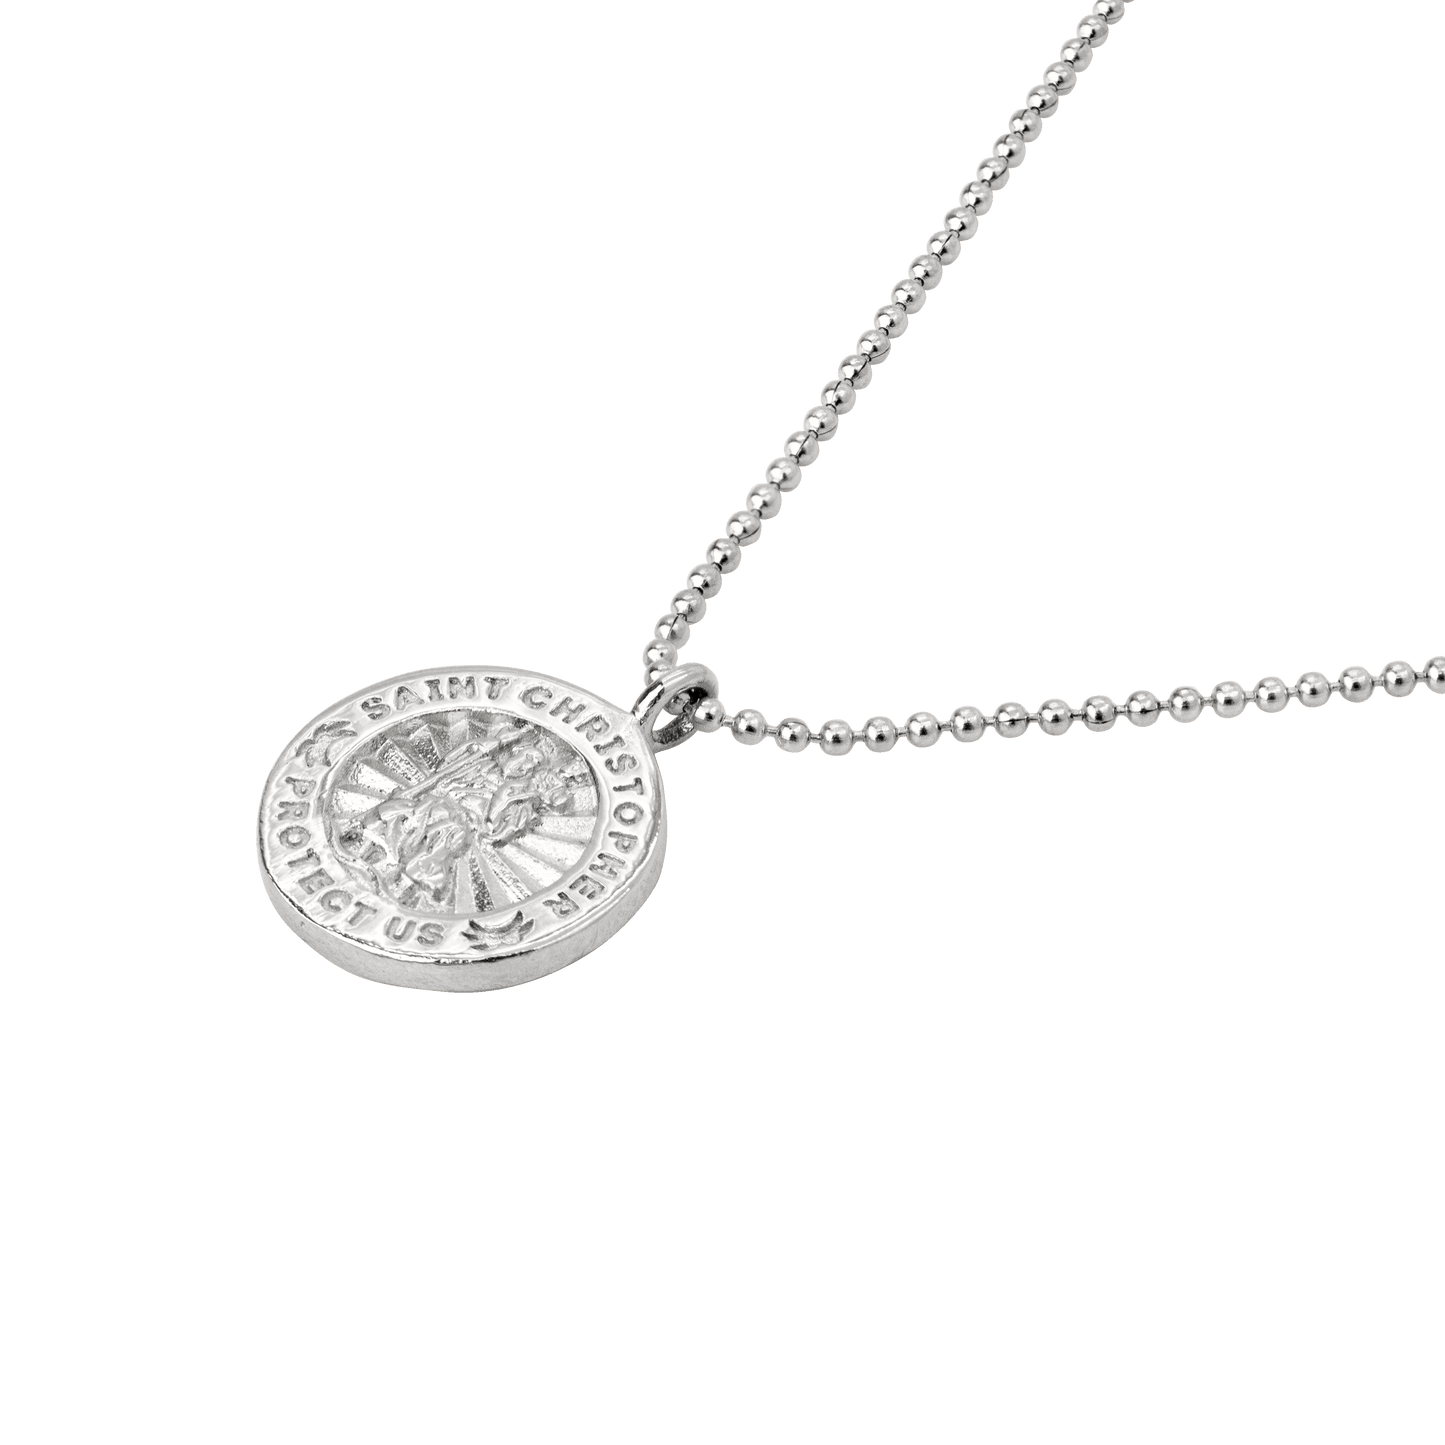 Saint Christopher Necklace Silver